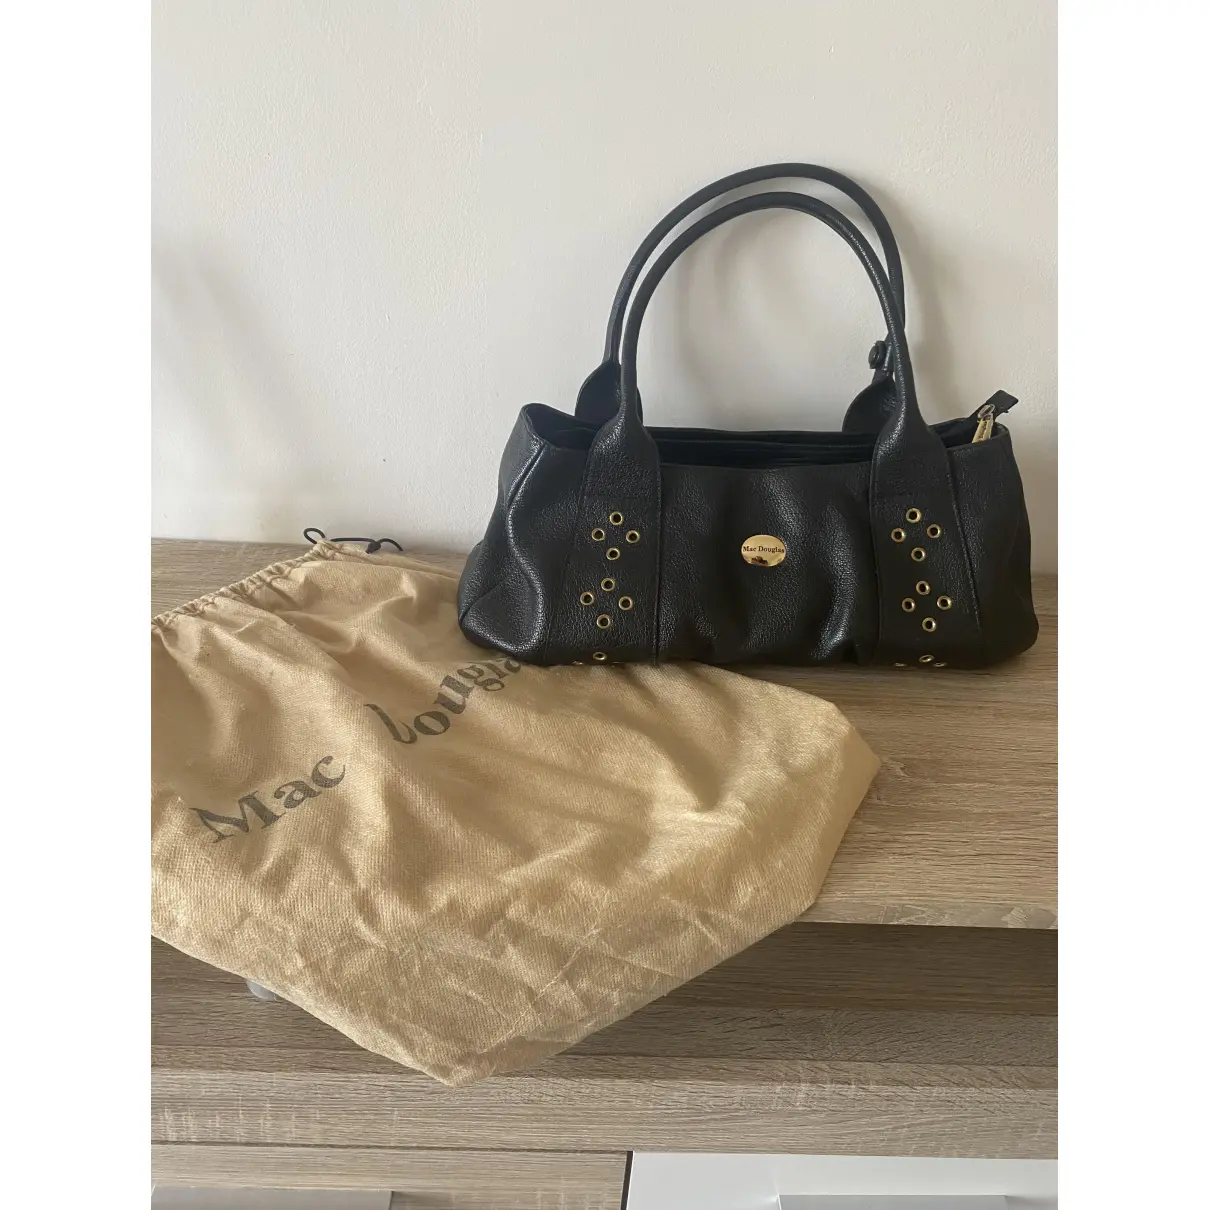 Leather handbag Mac Douglas